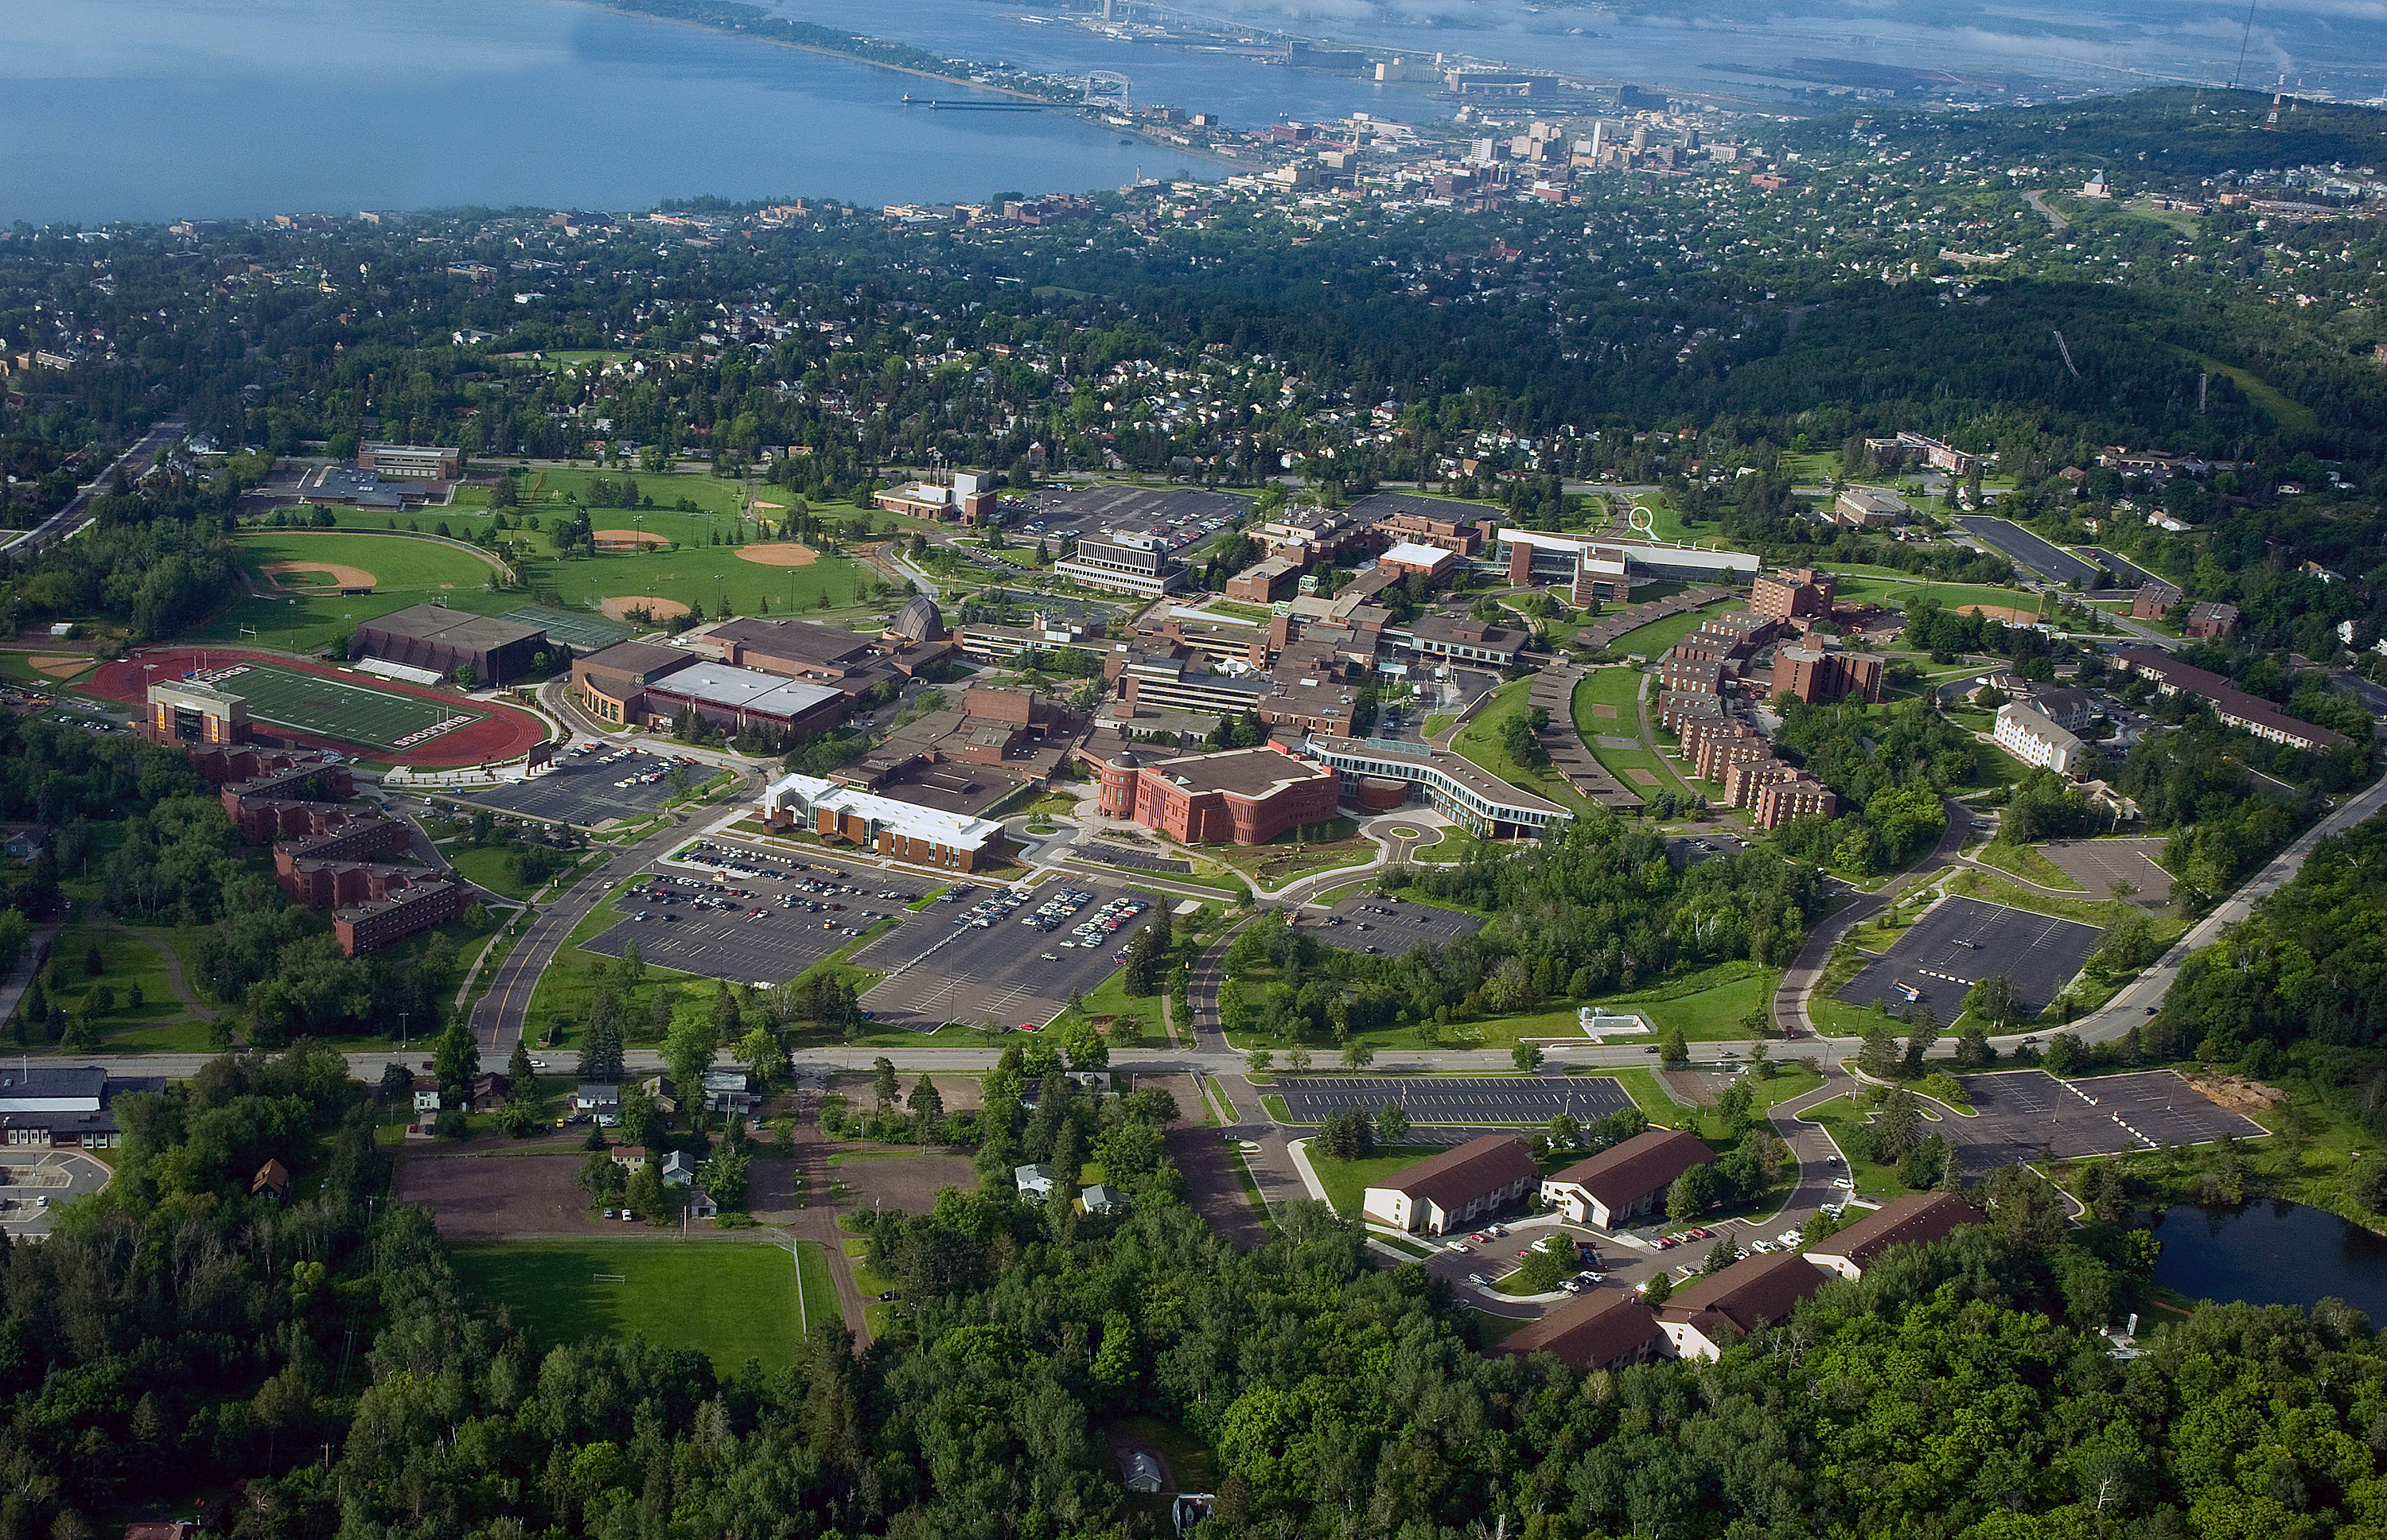 University of Minnesota - Duluth